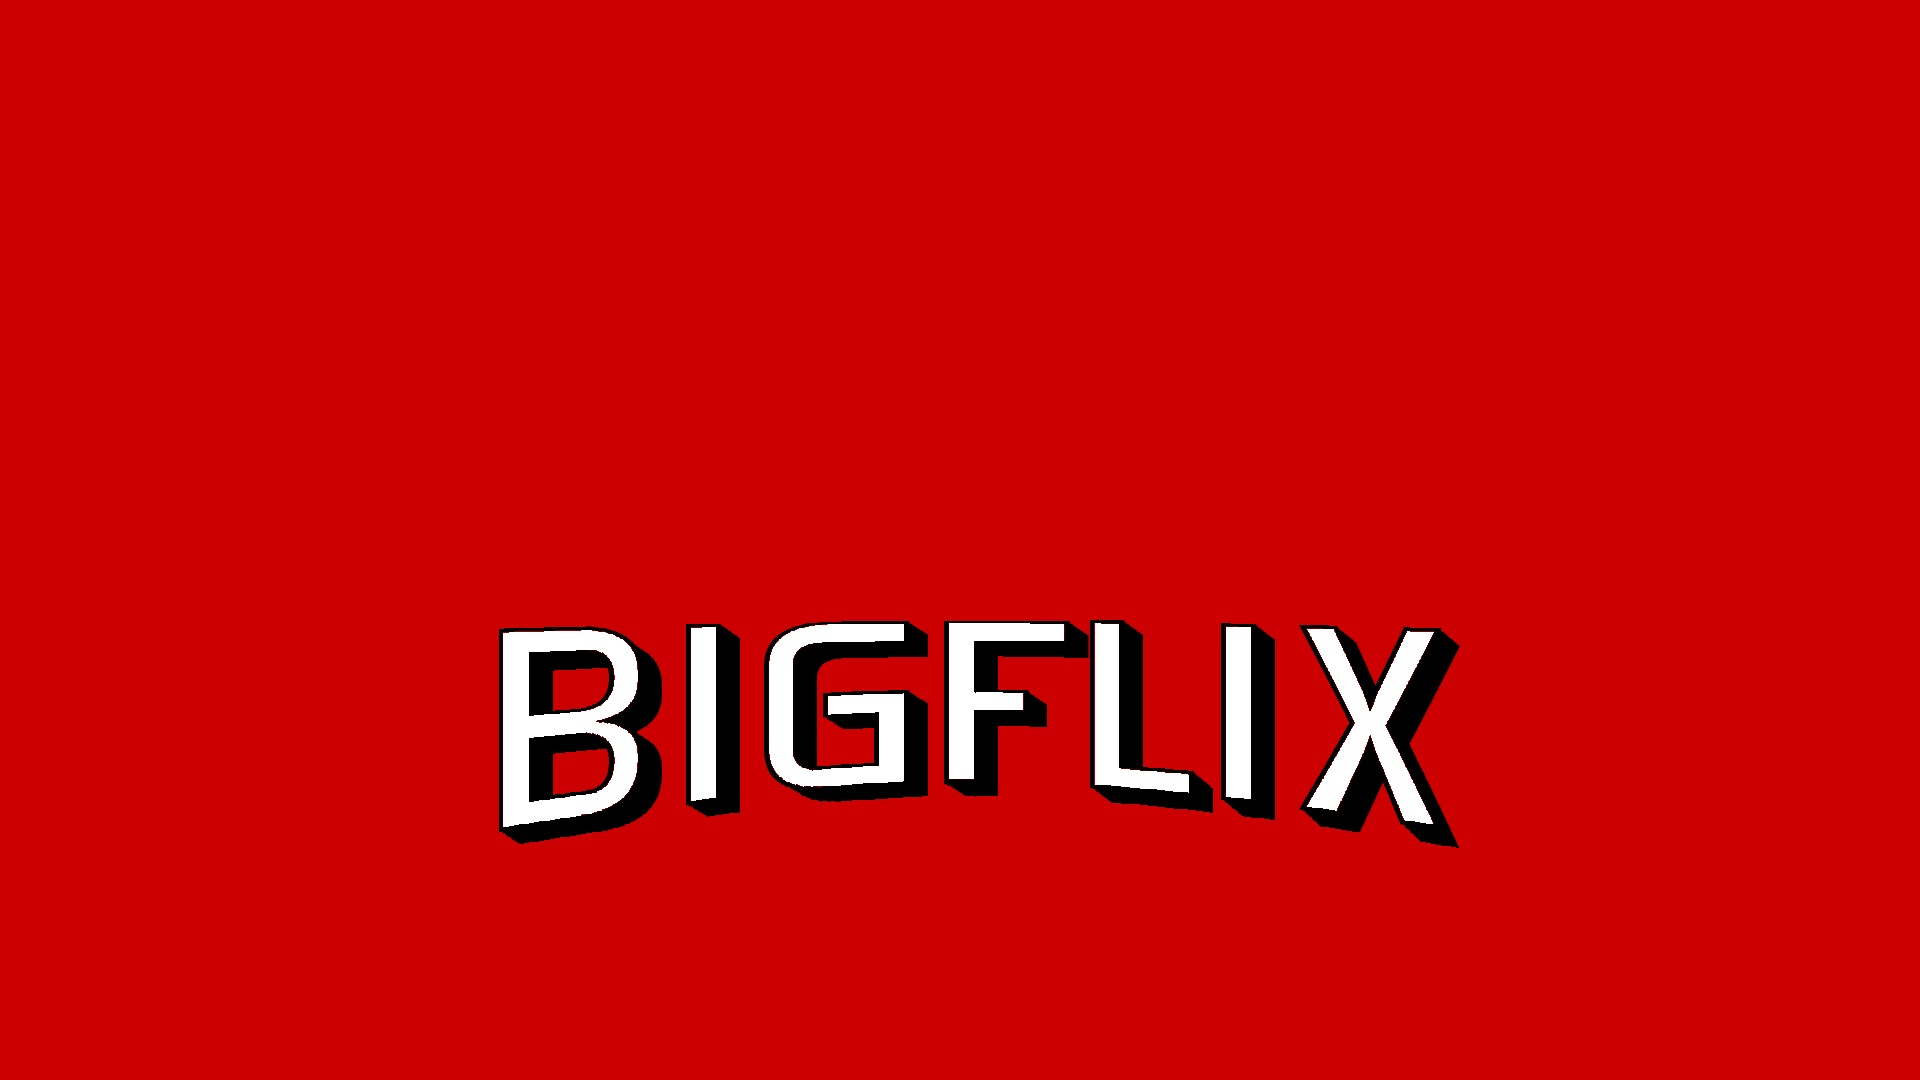 More information about "BIGFLIX"